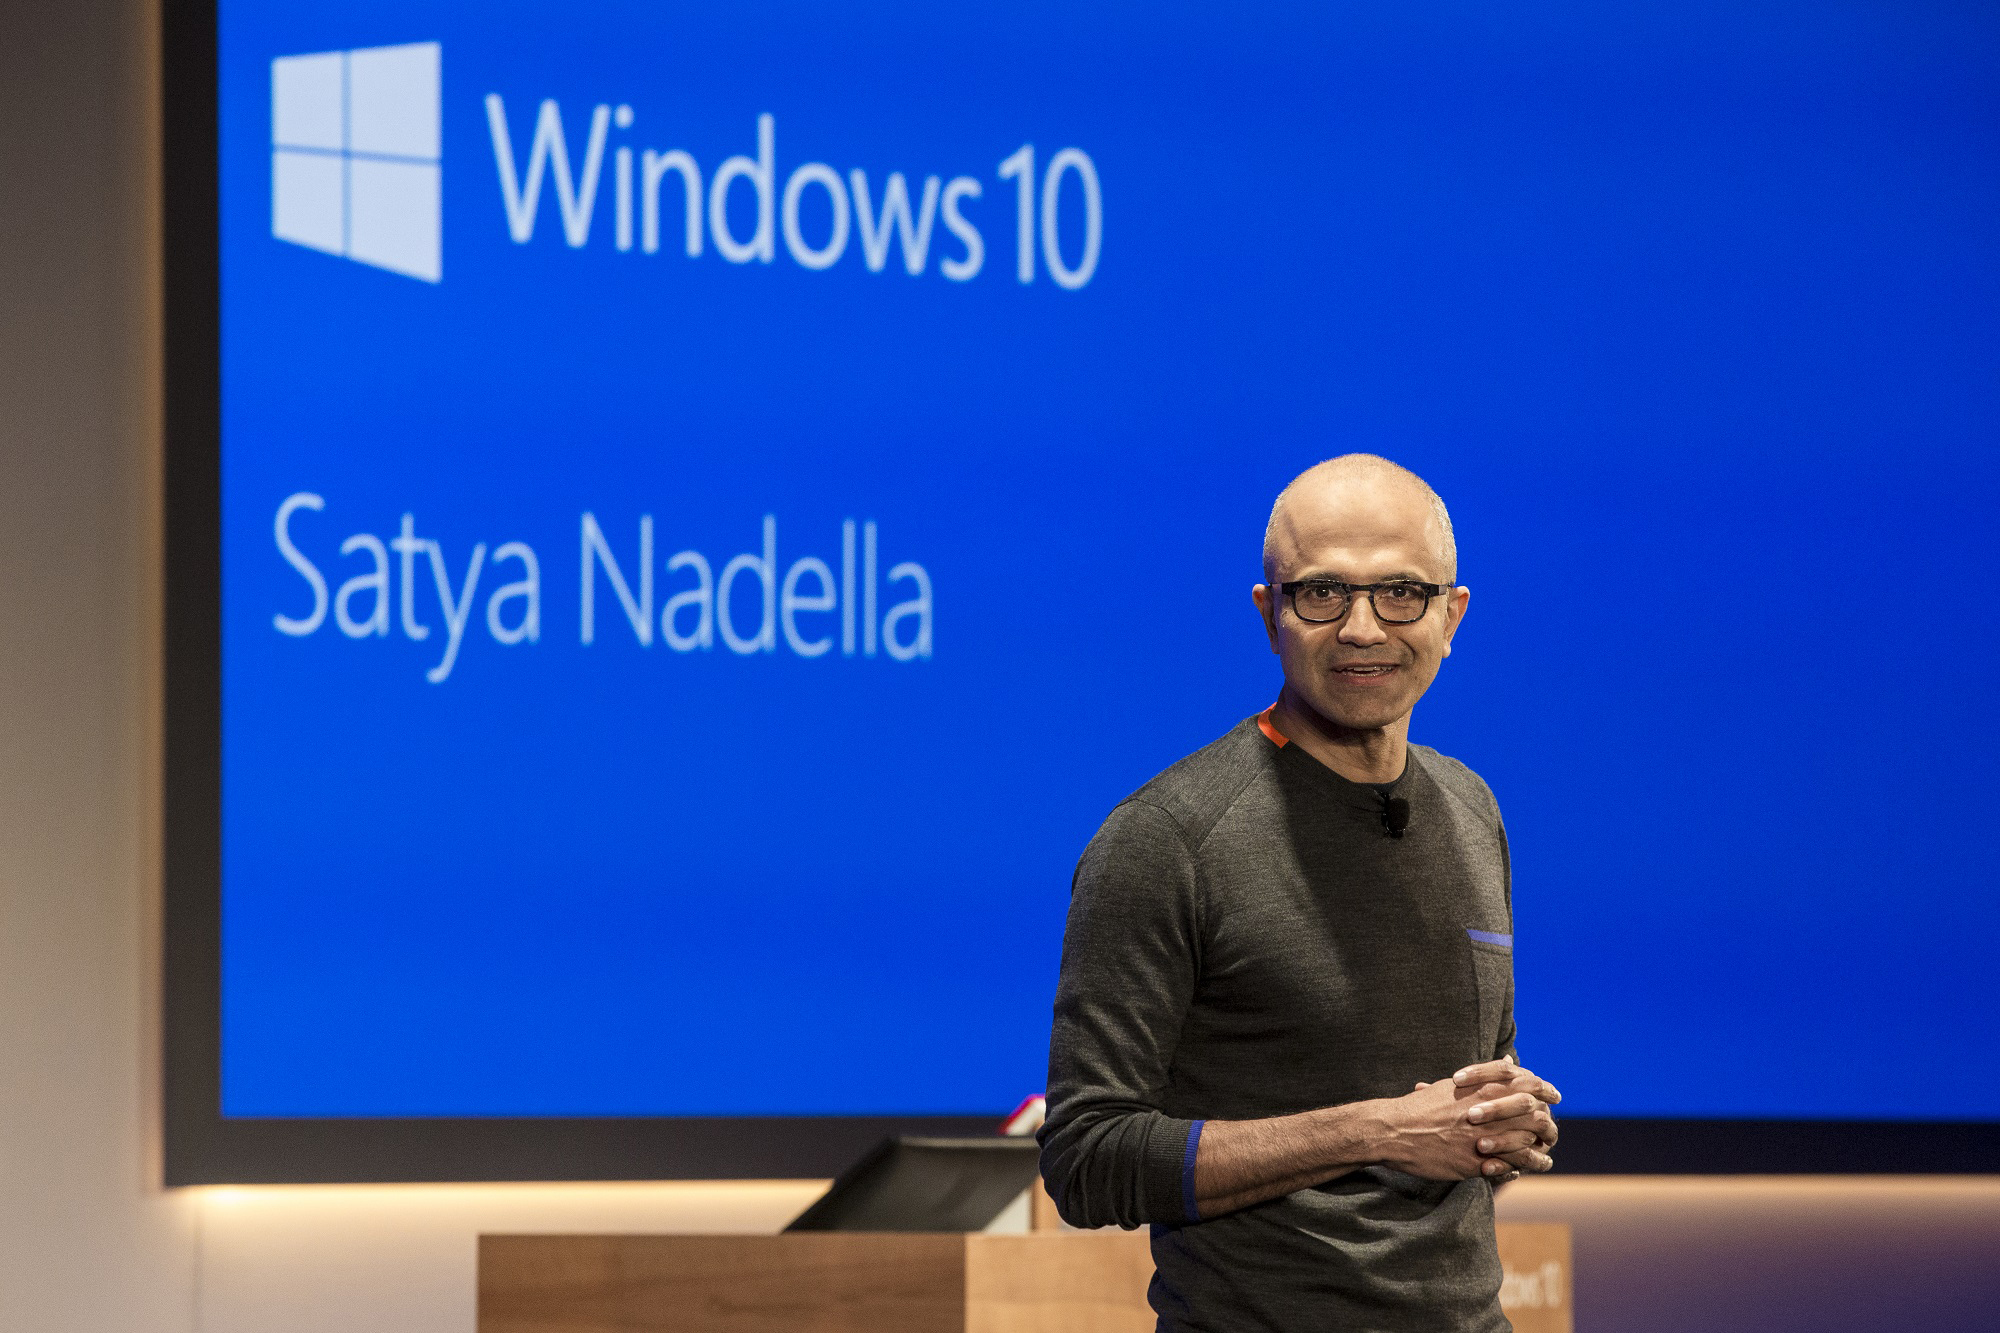 Microsoft Launches Windows 10